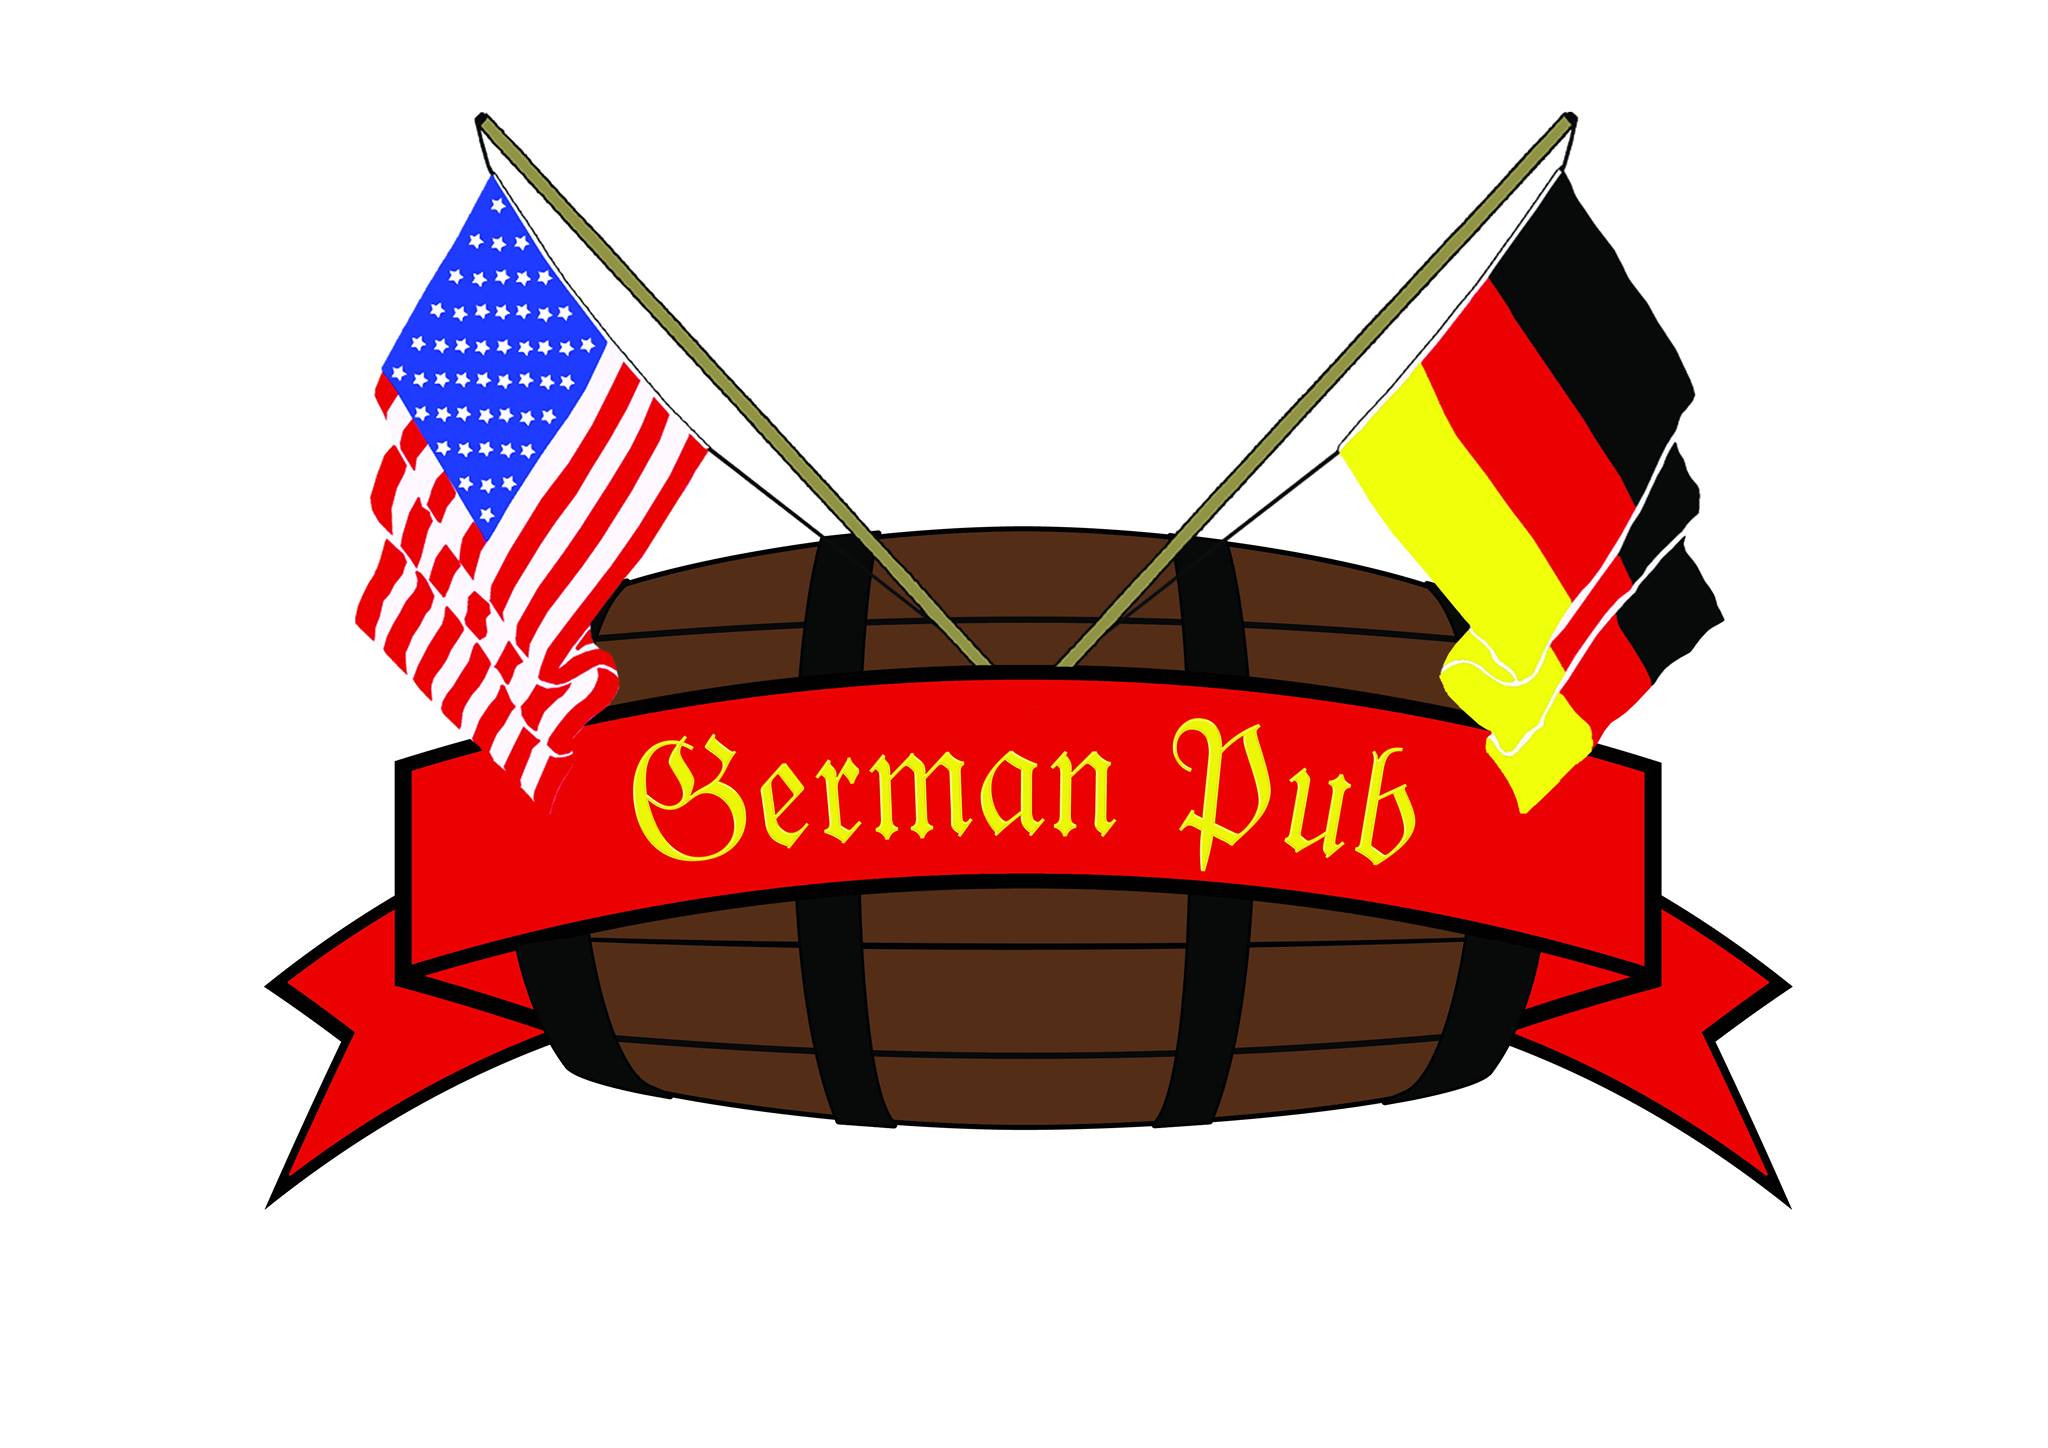 The German Pub logo